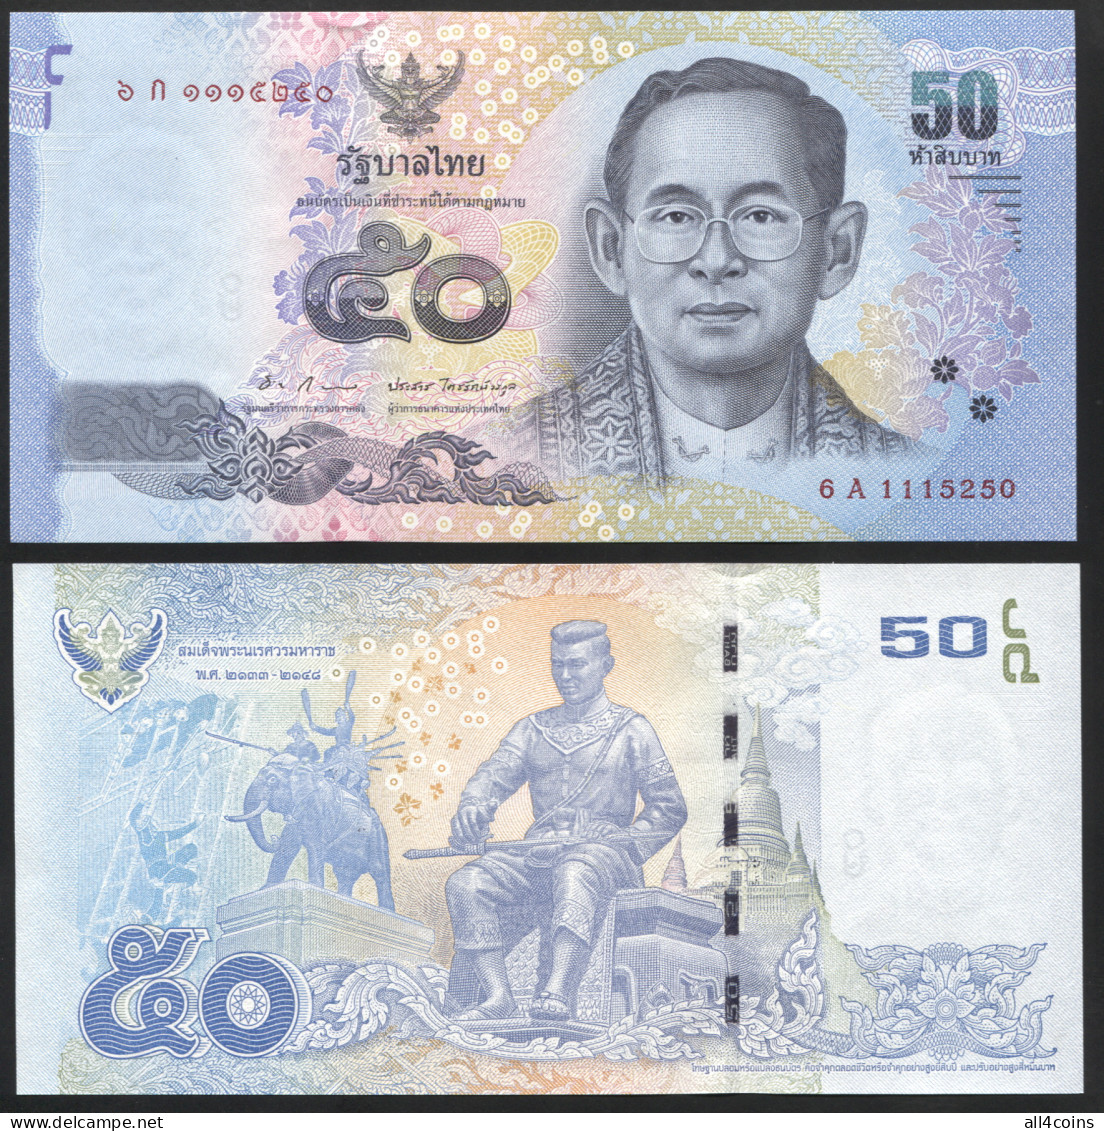 Thailand 50 Baht. ND (2012) Unc. Banknote Cat# P.119 - Thailand